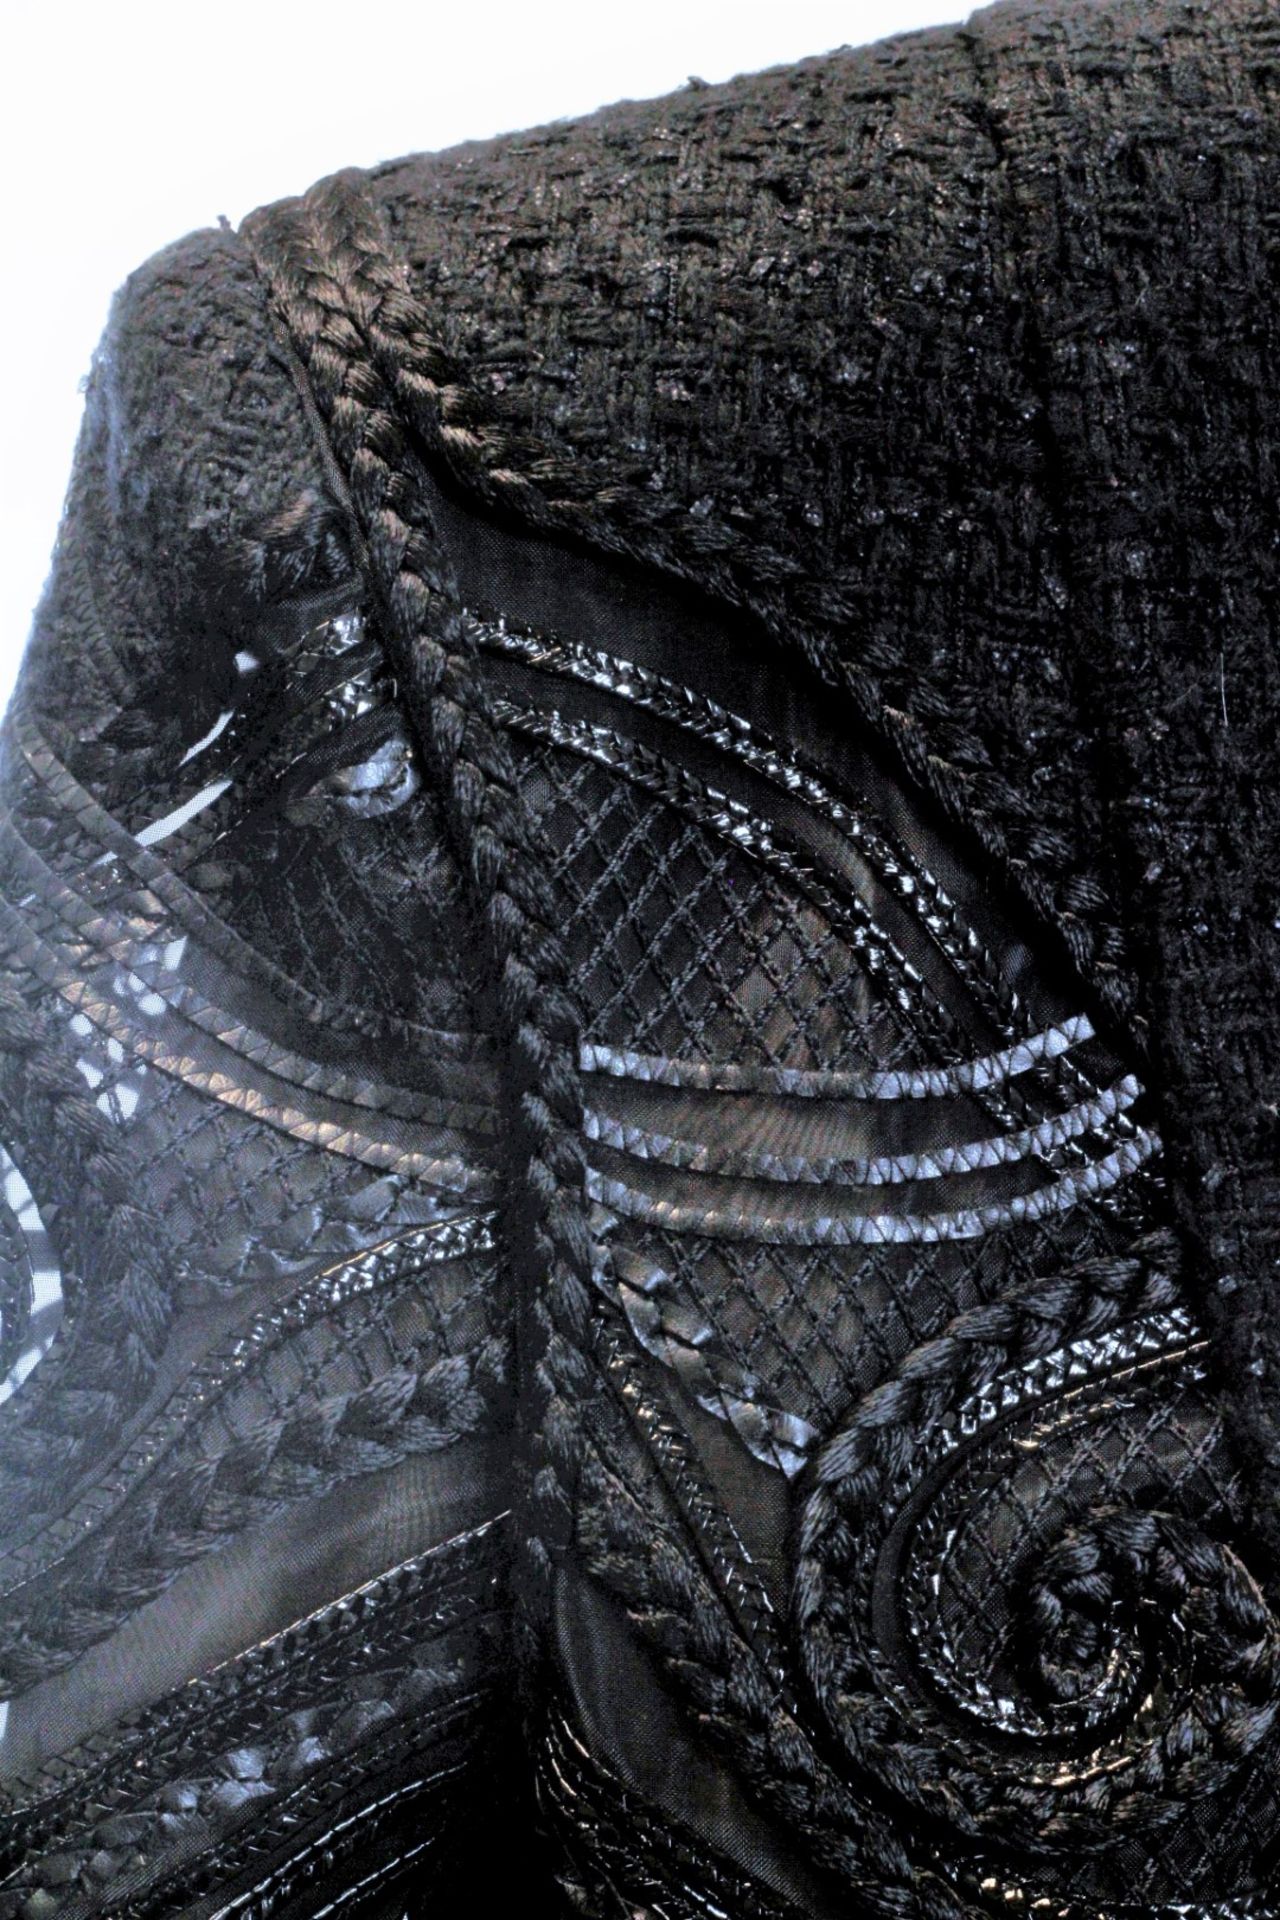 1 x Balmain Black Jacket - Size: 14 - Material: Body 48% Cotton, 27% Acrylic, 19% Nylon, 6% Viscose. - Image 15 of 18